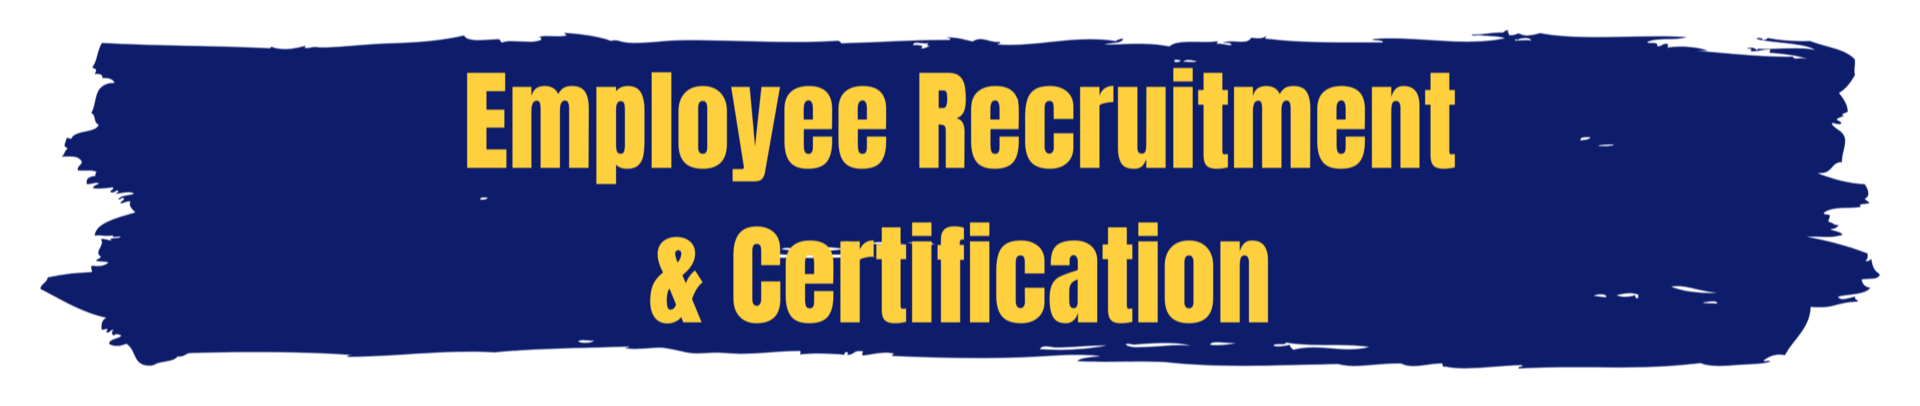 Employee Recruitment & Certification